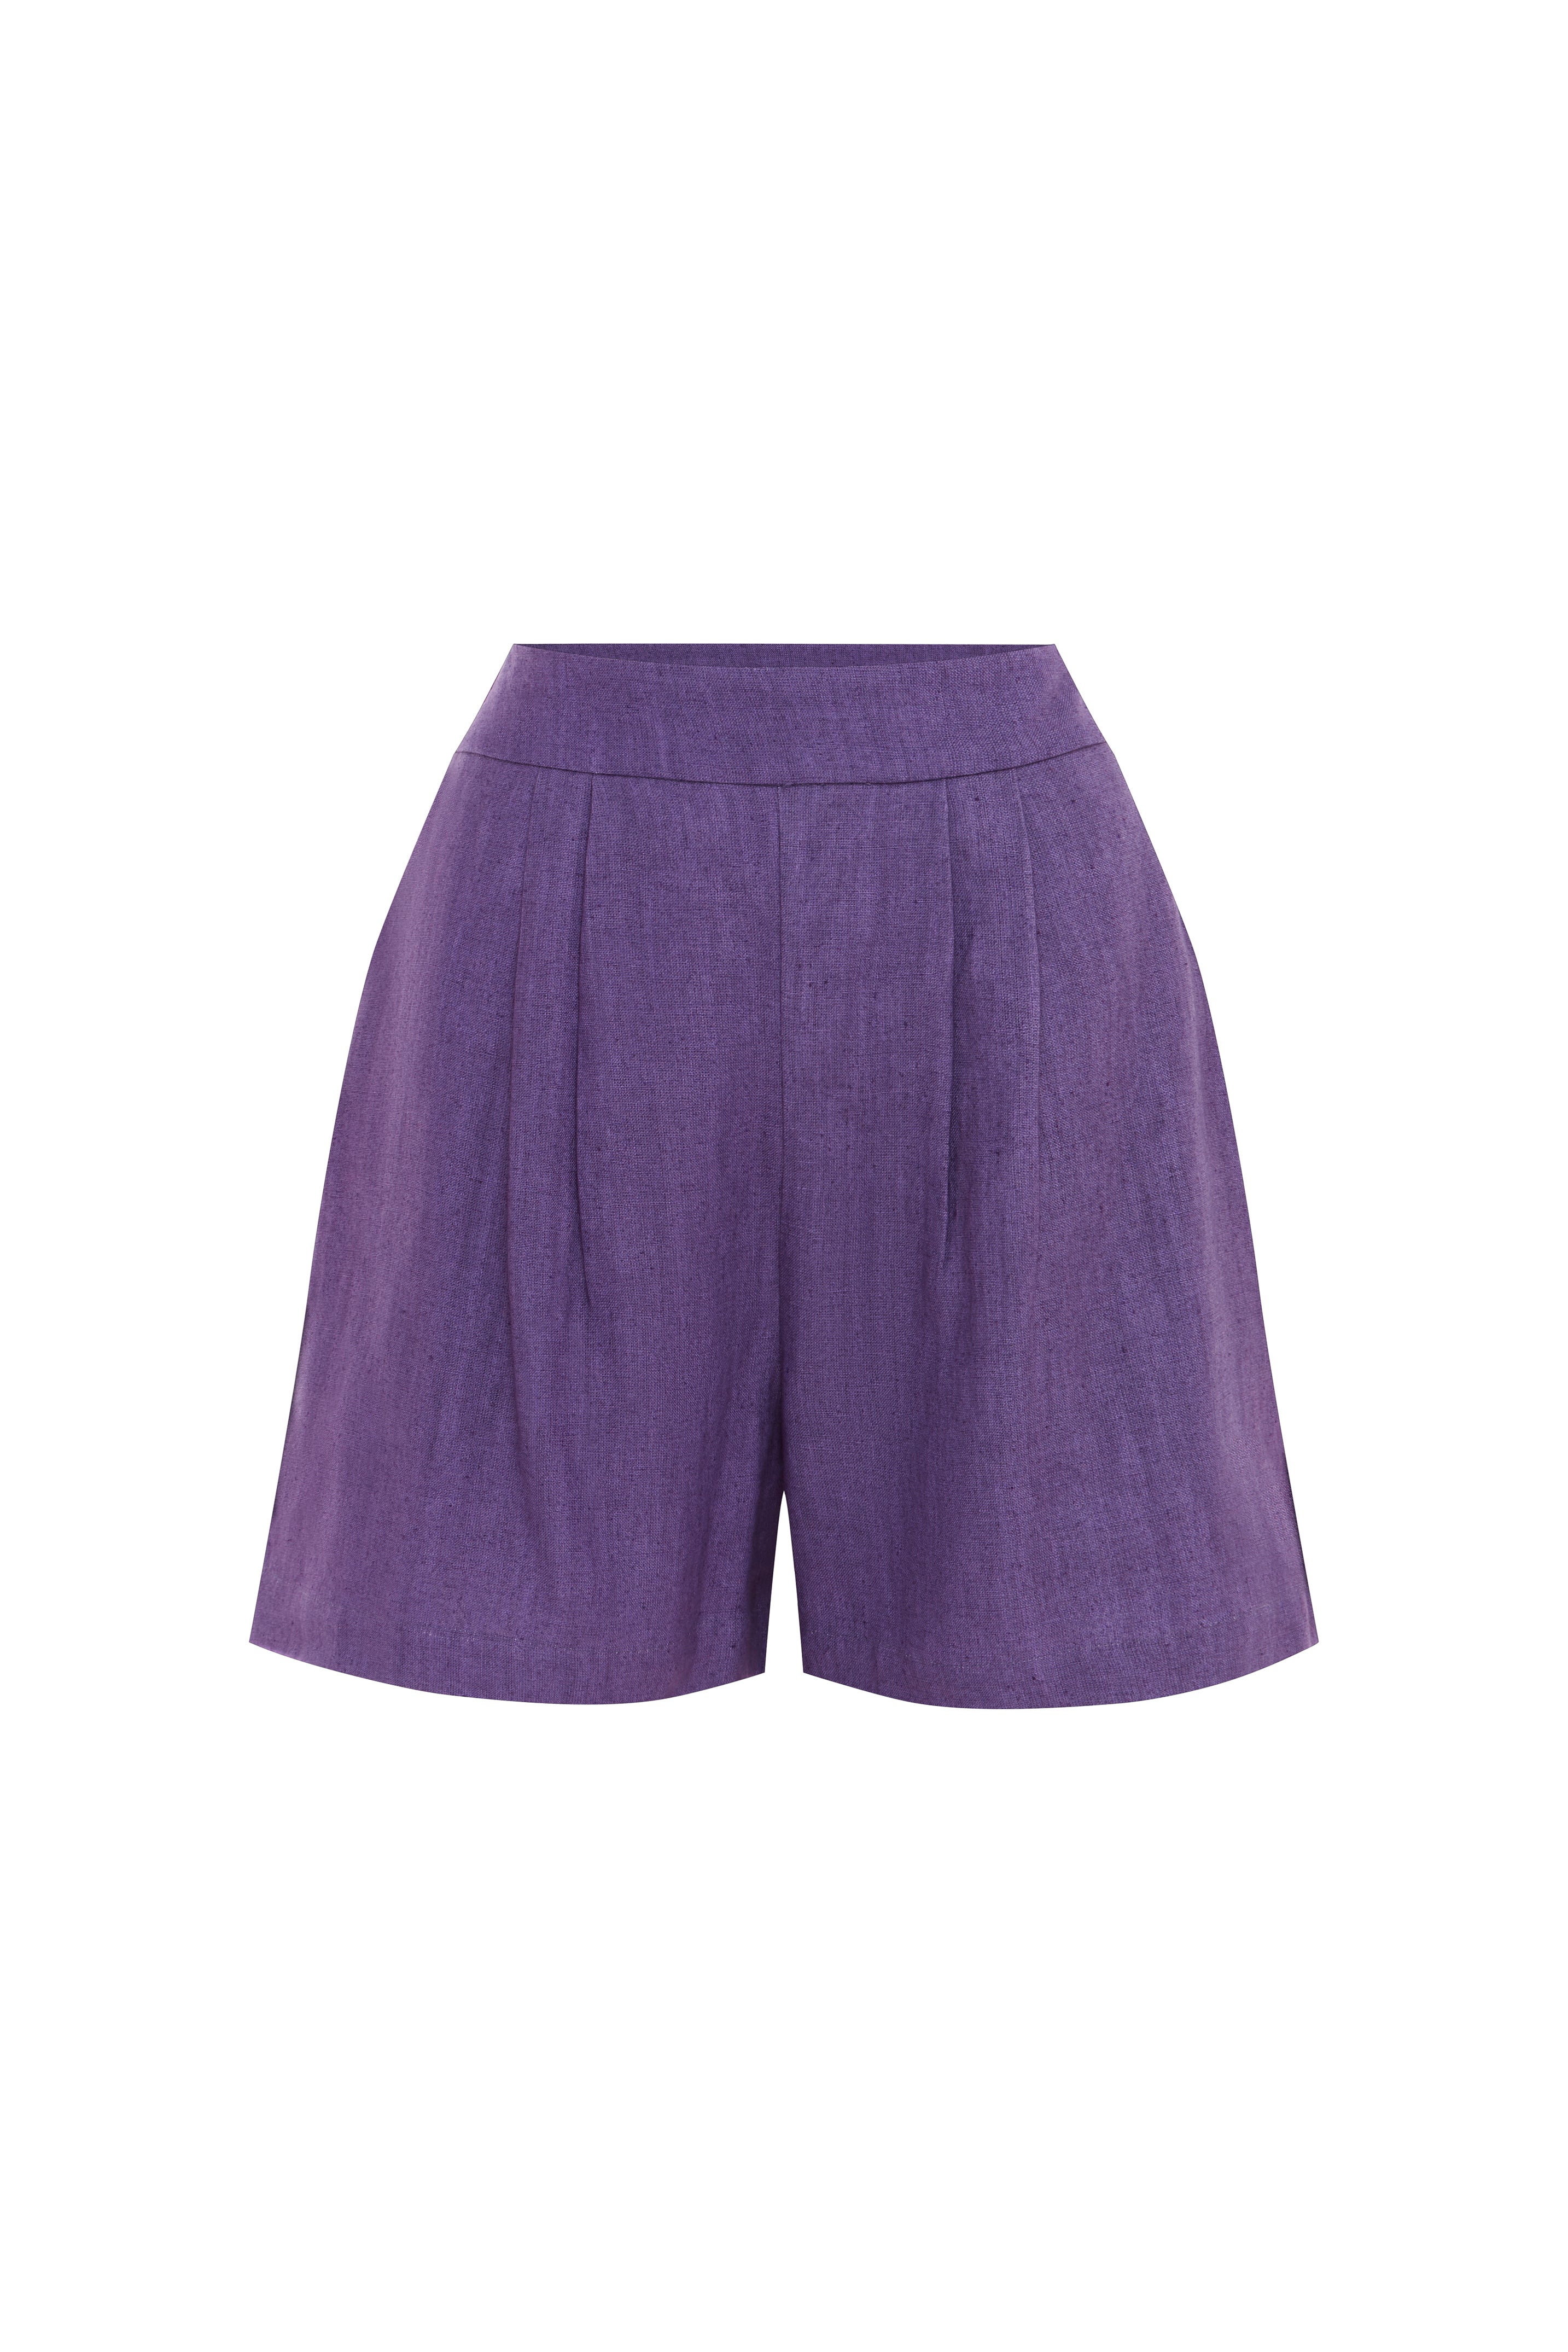 Santorini Short in Solid Purple